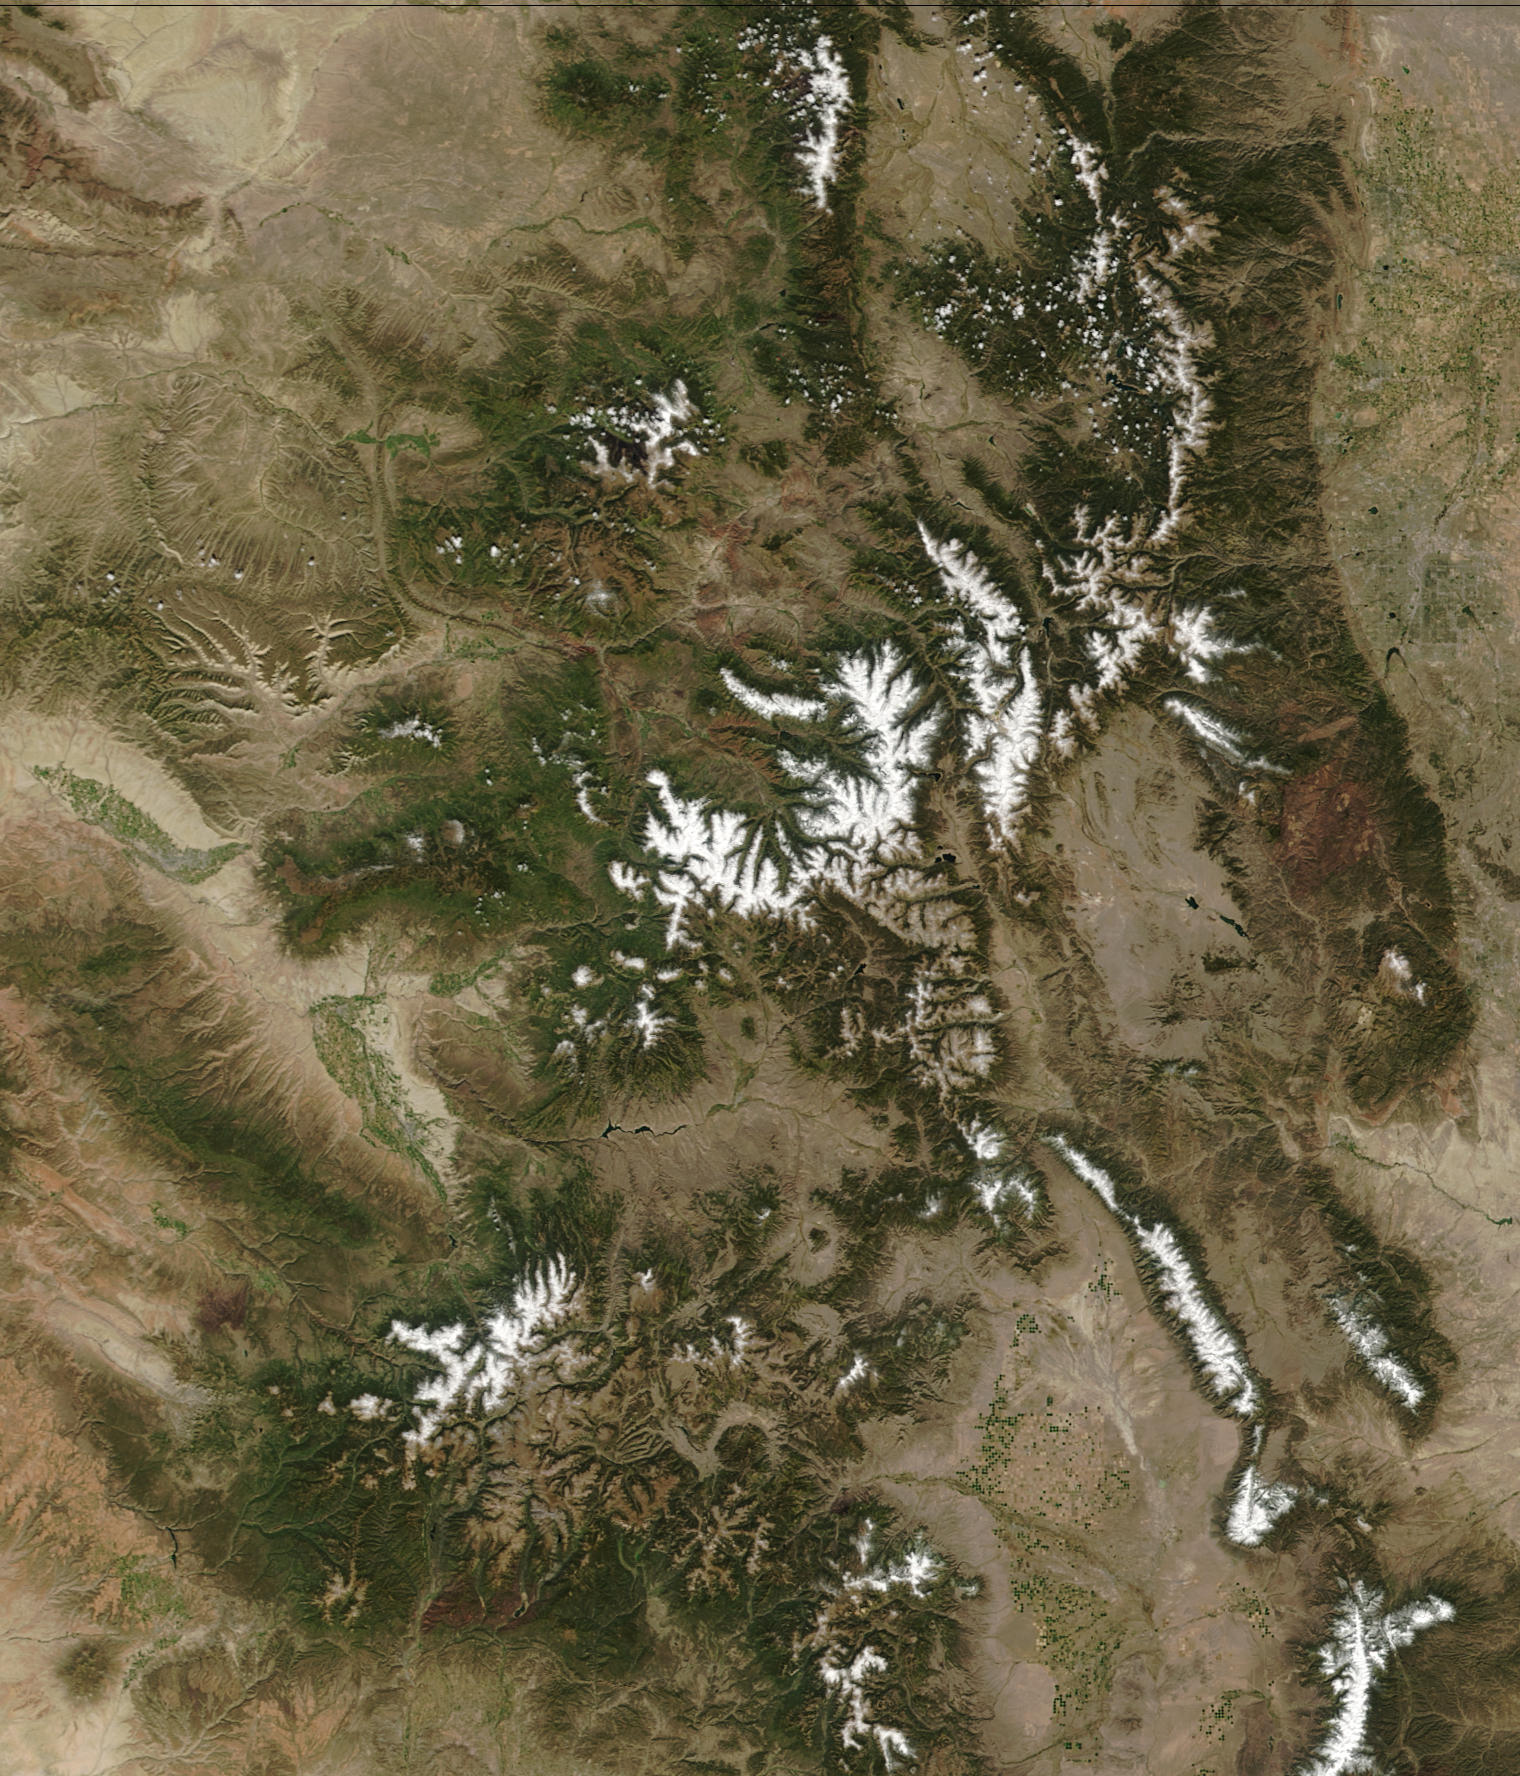 Colorado Rockies - Wikipedia